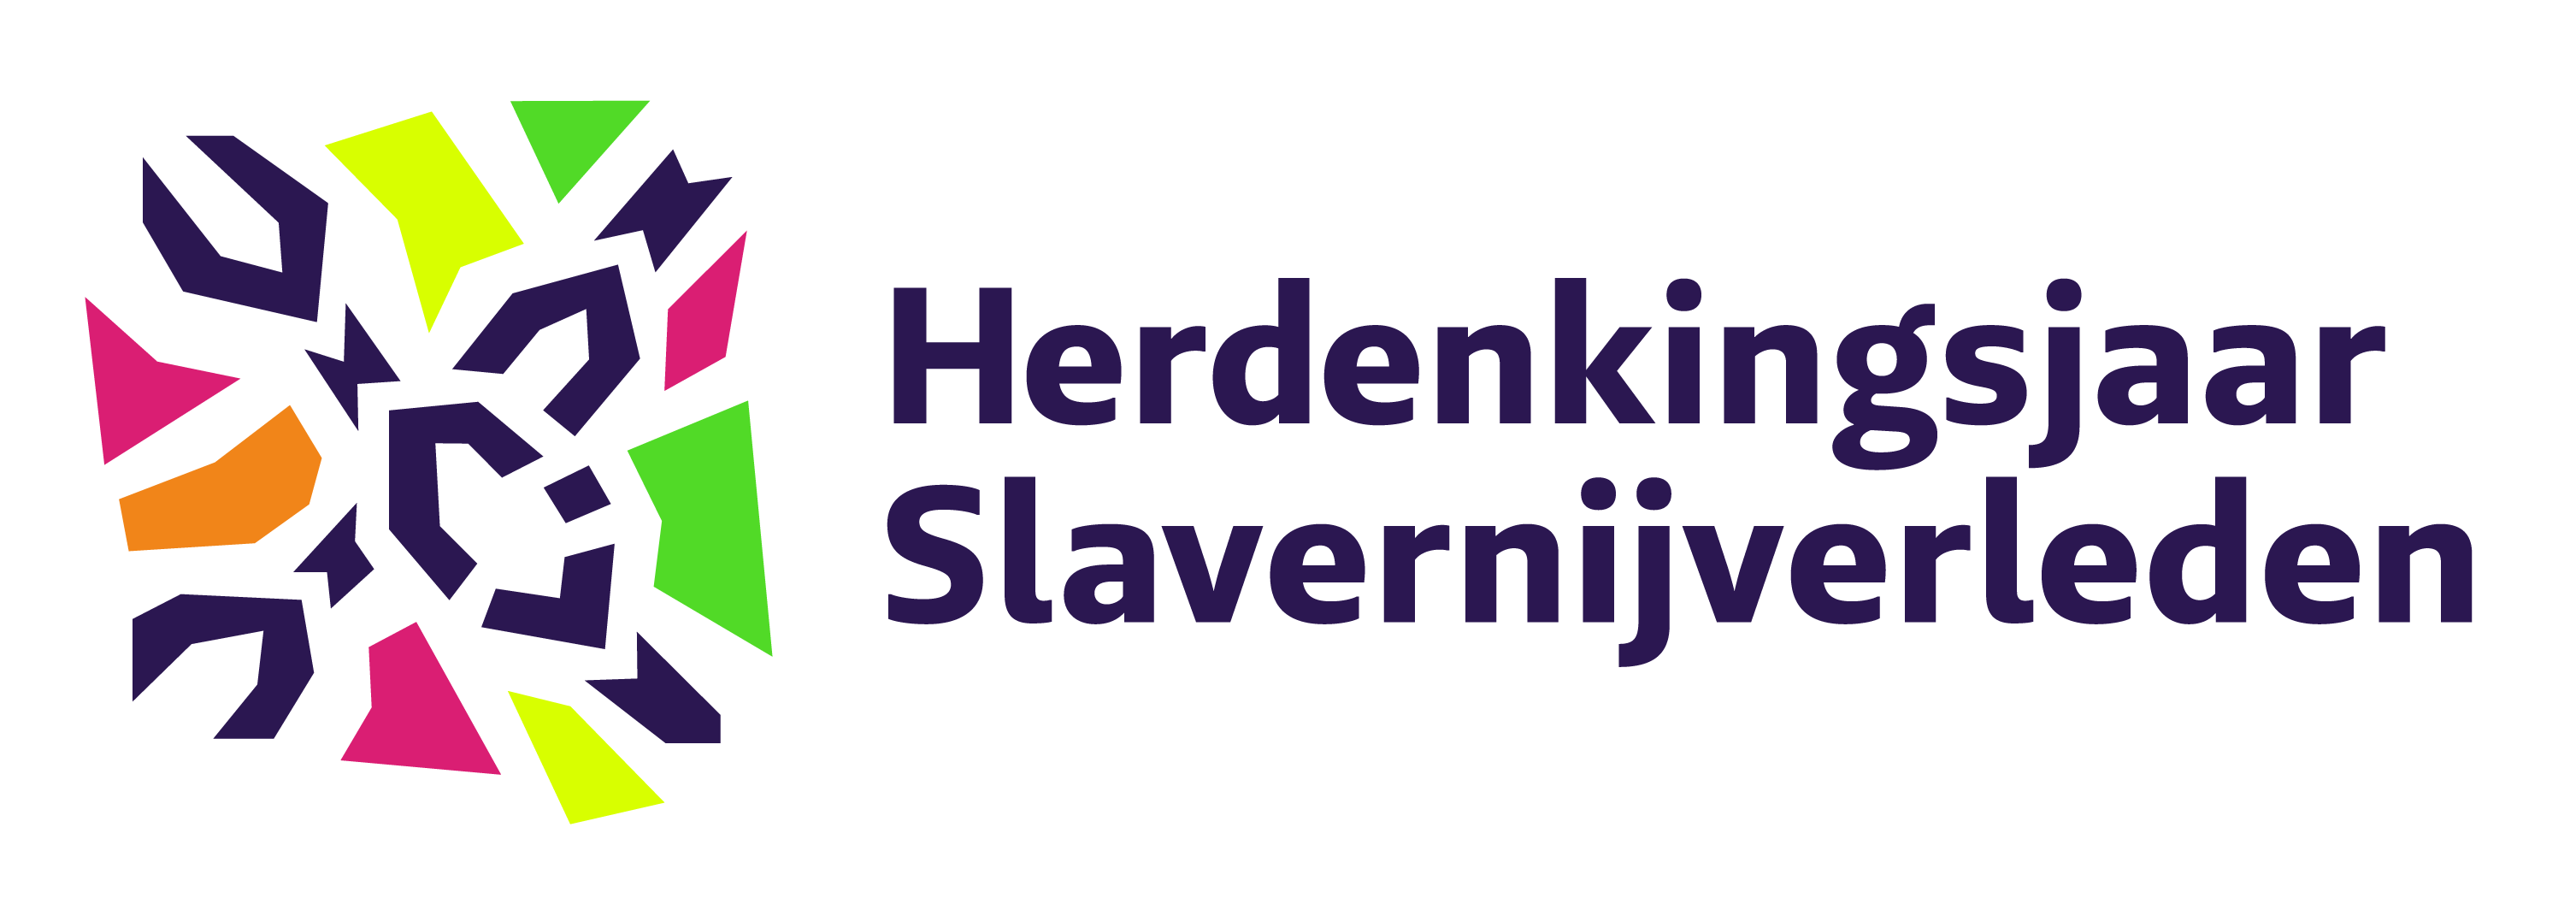 Logo slavernijverleden 